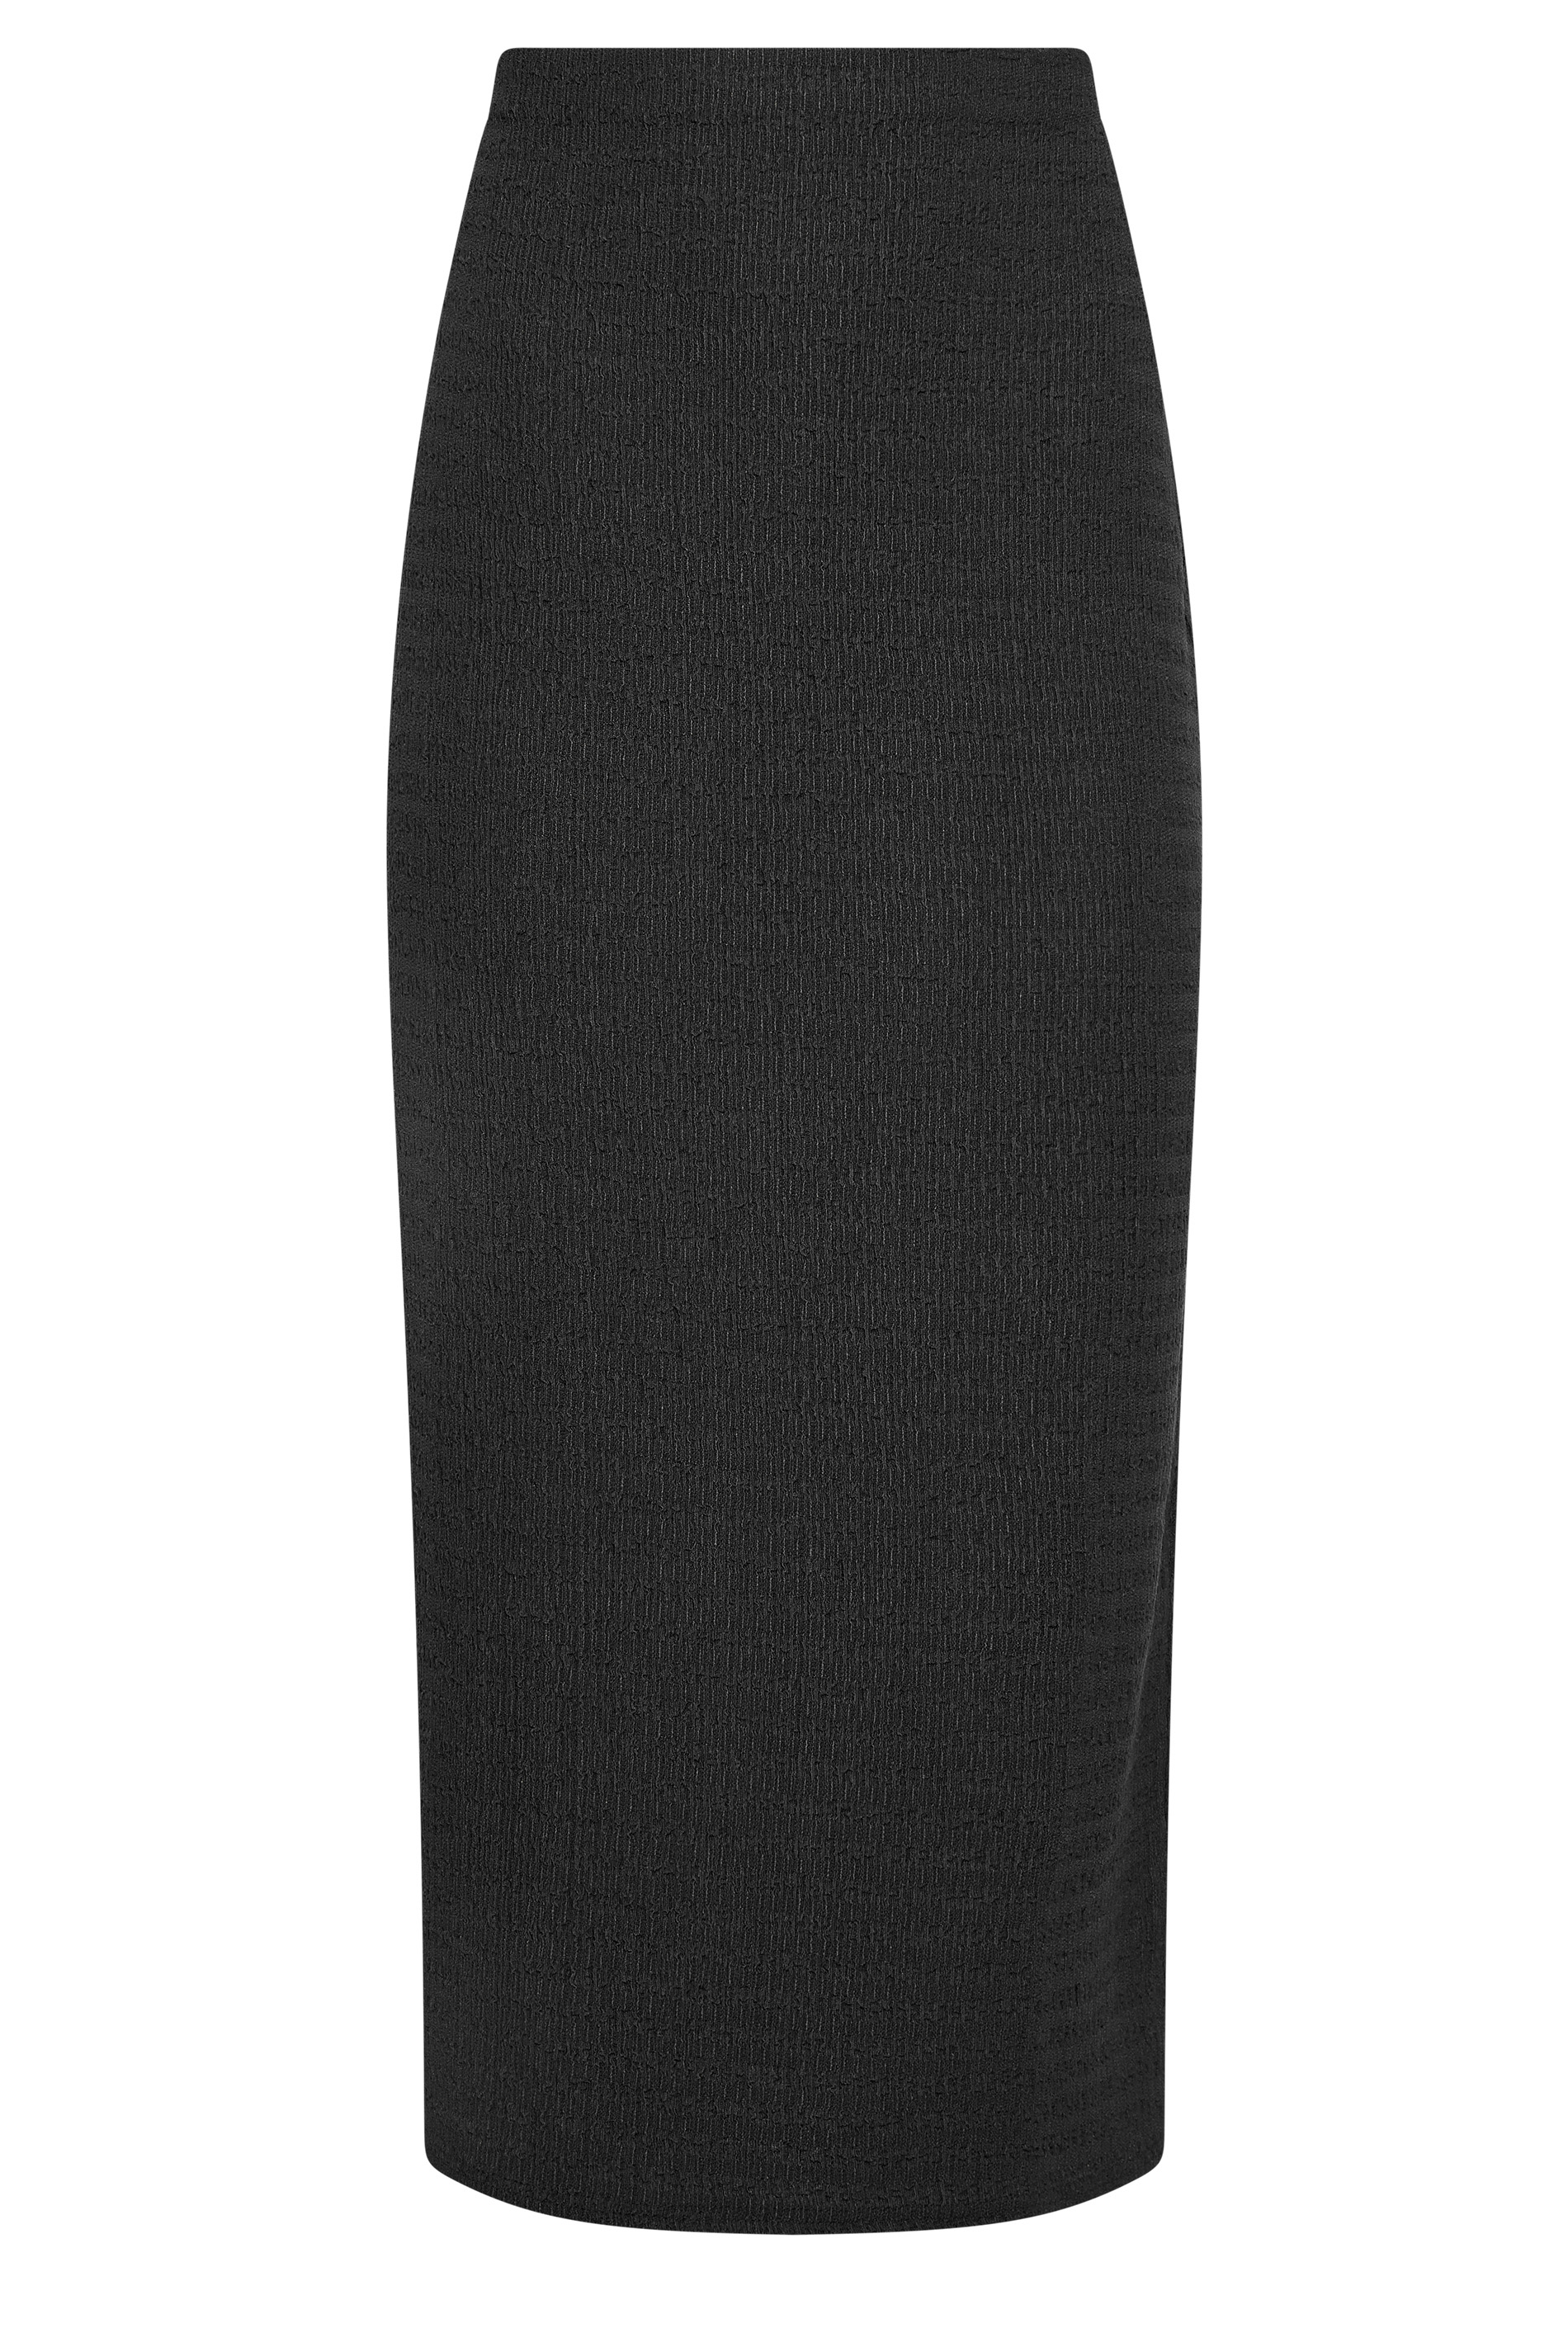 M&Co Black Textured Midi Tube Skirt | M&Co